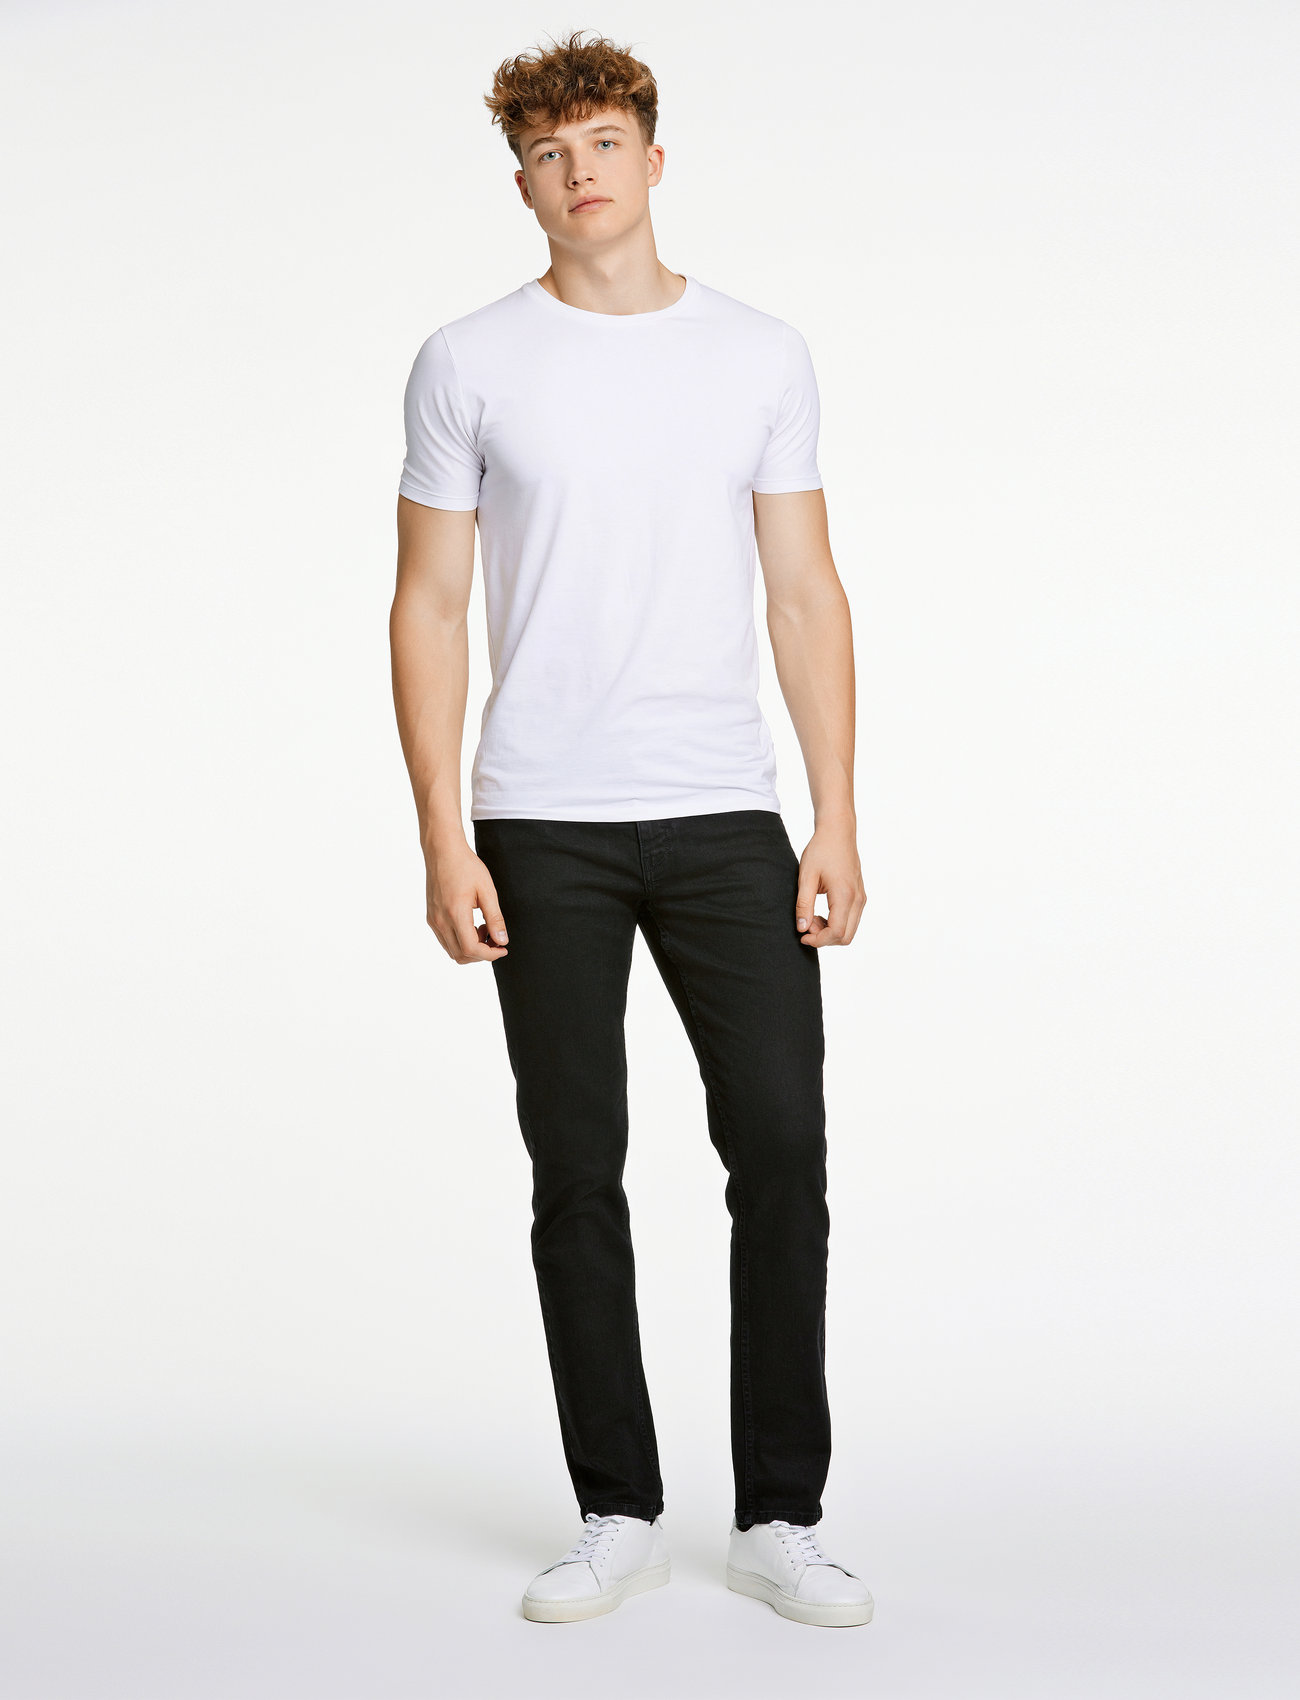 Lindbergh - Tapered Fit Superflex Jeans - slim fit jeans - cold black - 1